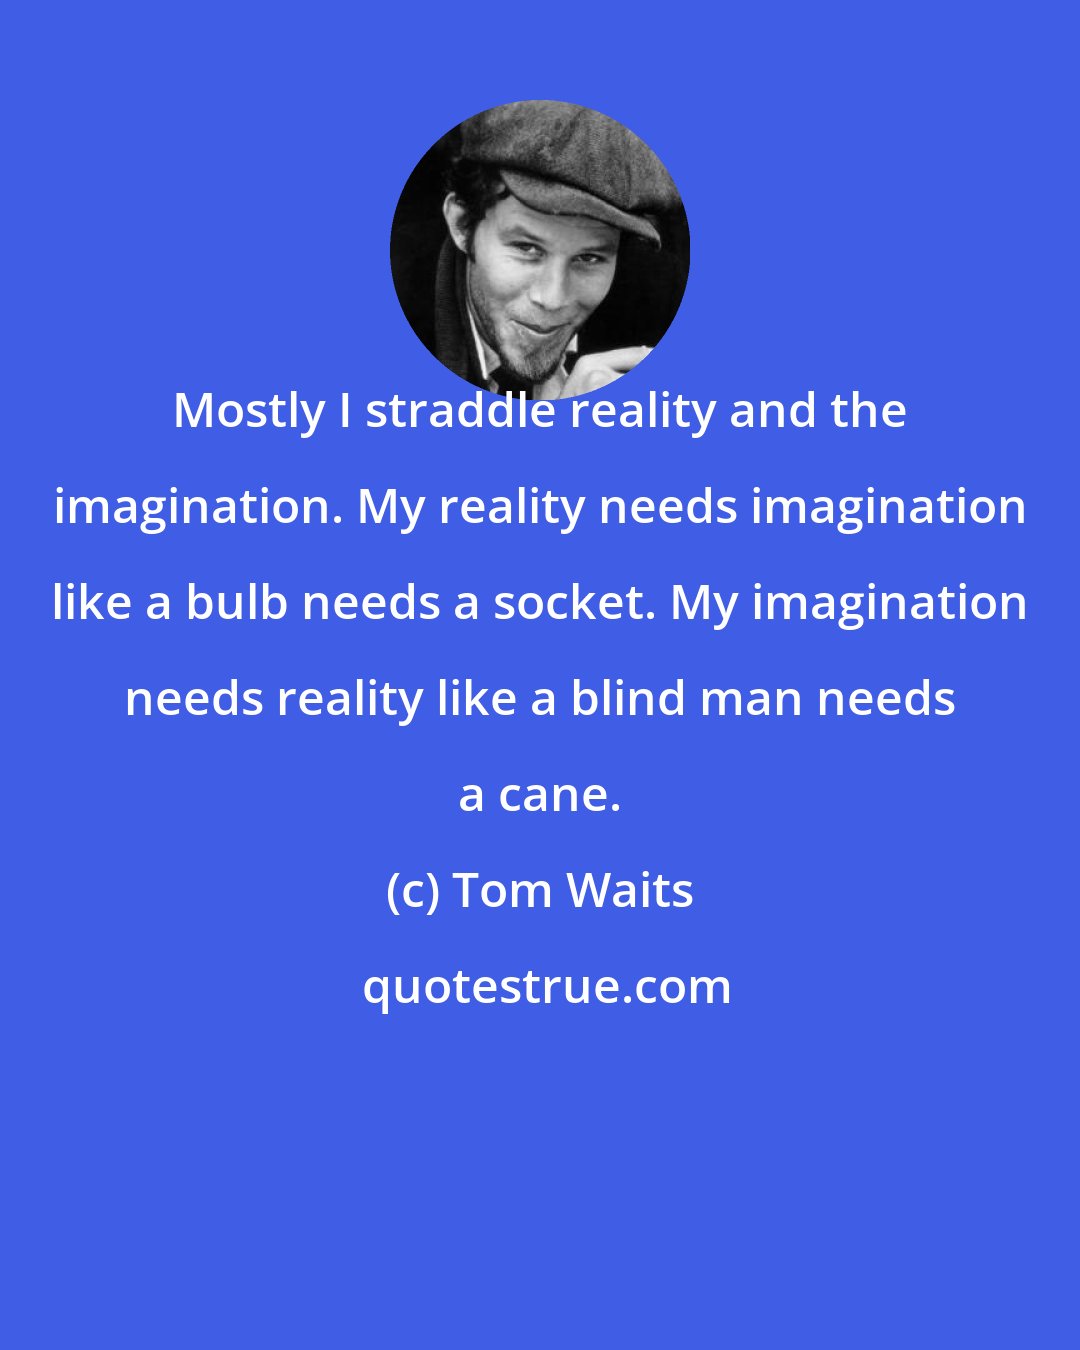 Tom Waits: Mostly I straddle reality and the imagination. My reality needs imagination like a bulb needs a socket. My imagination needs reality like a blind man needs a cane.